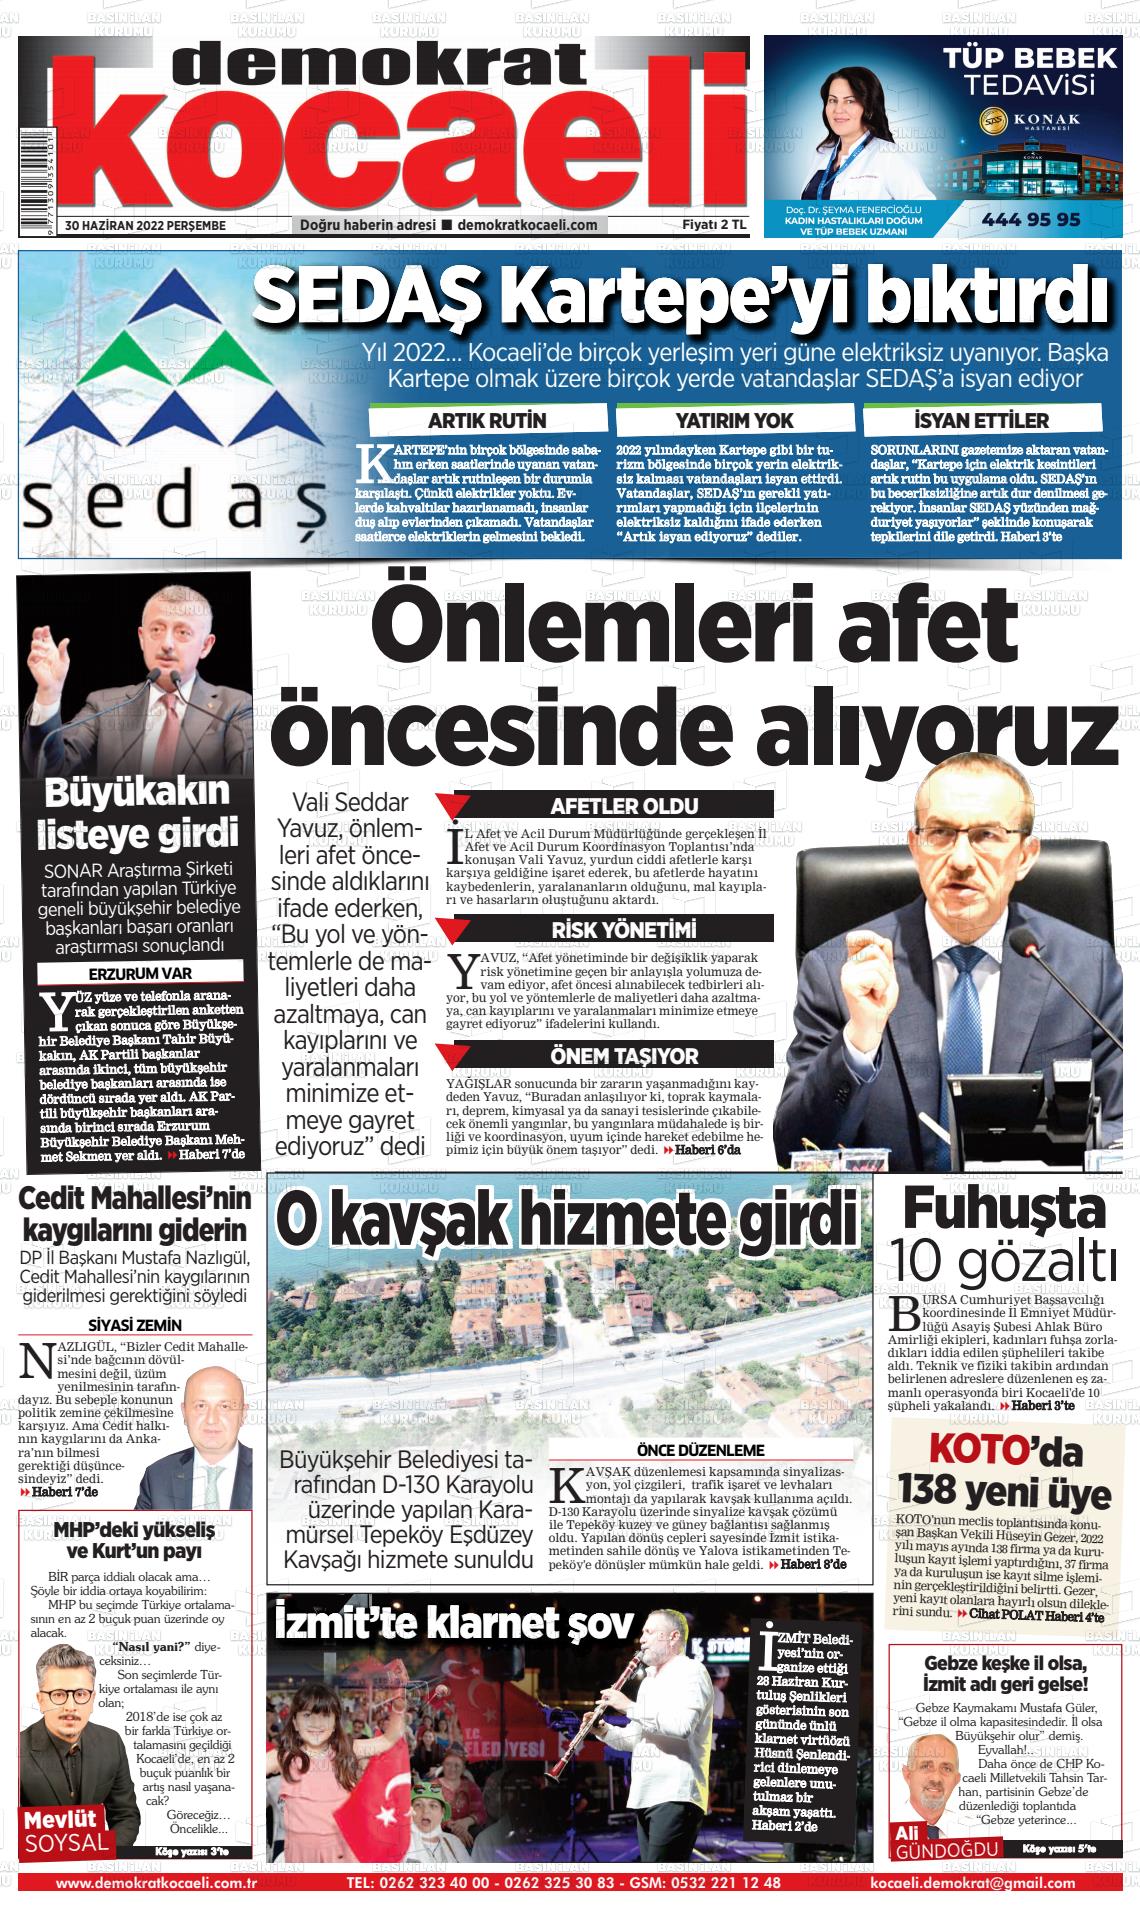 01 Temmuz 2022 Demokrat Kocaeli Gazete Manşeti